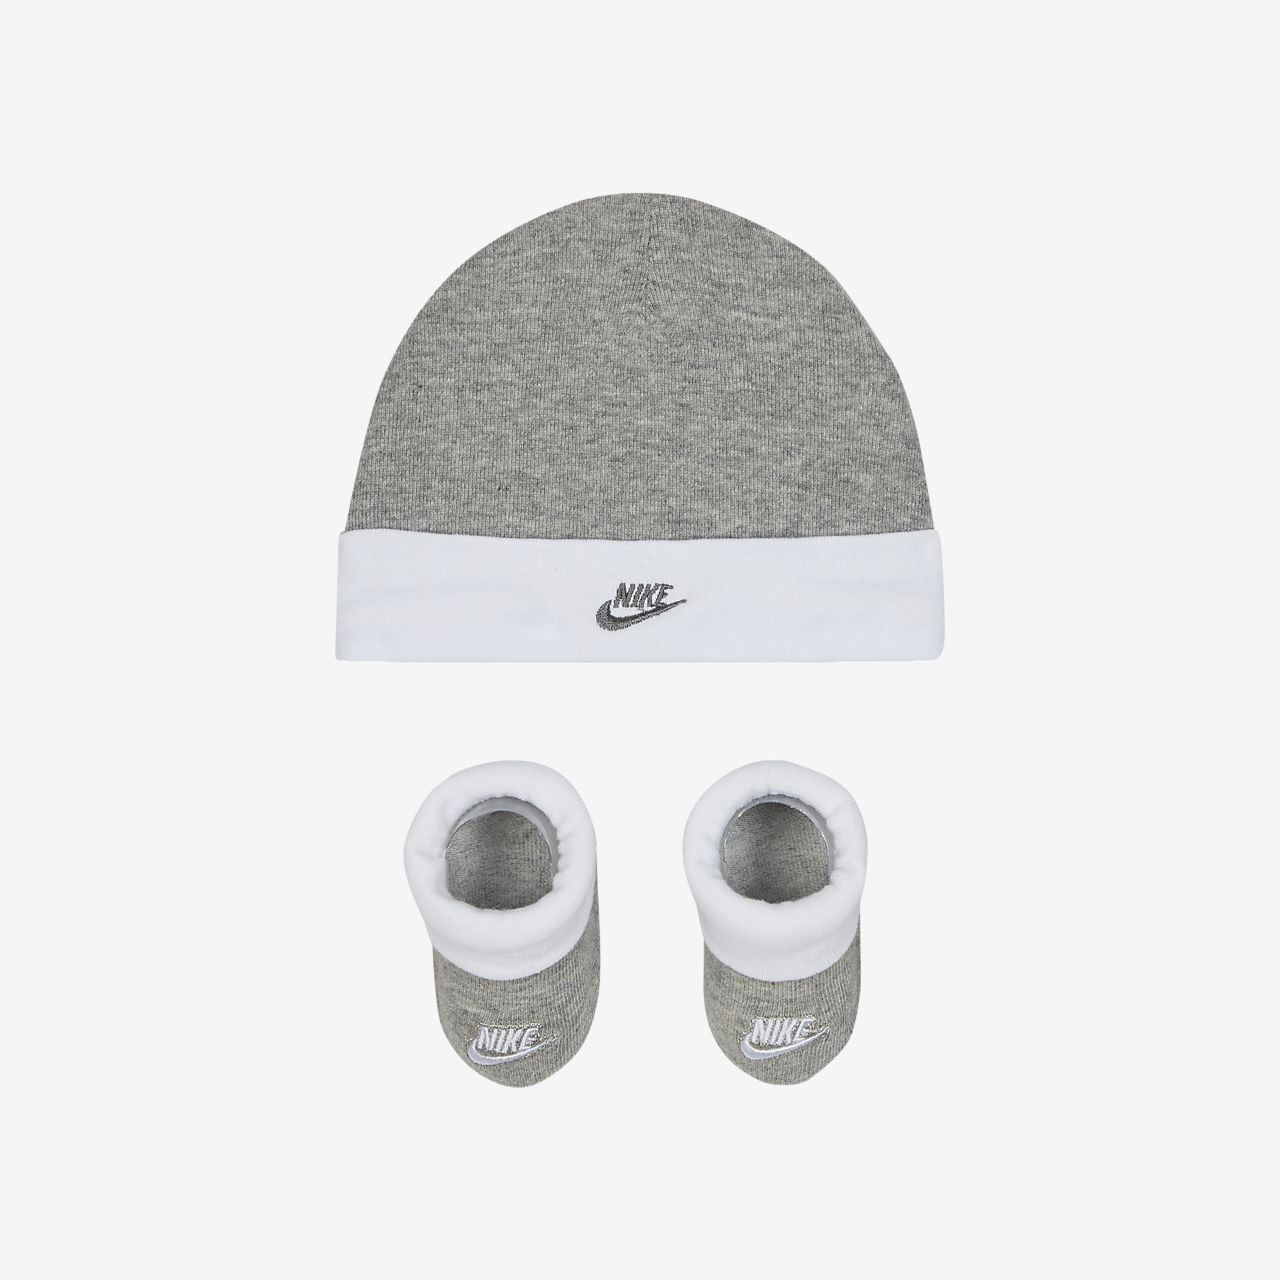 Nike Baby Hat and Booties Box Set. Nike.com